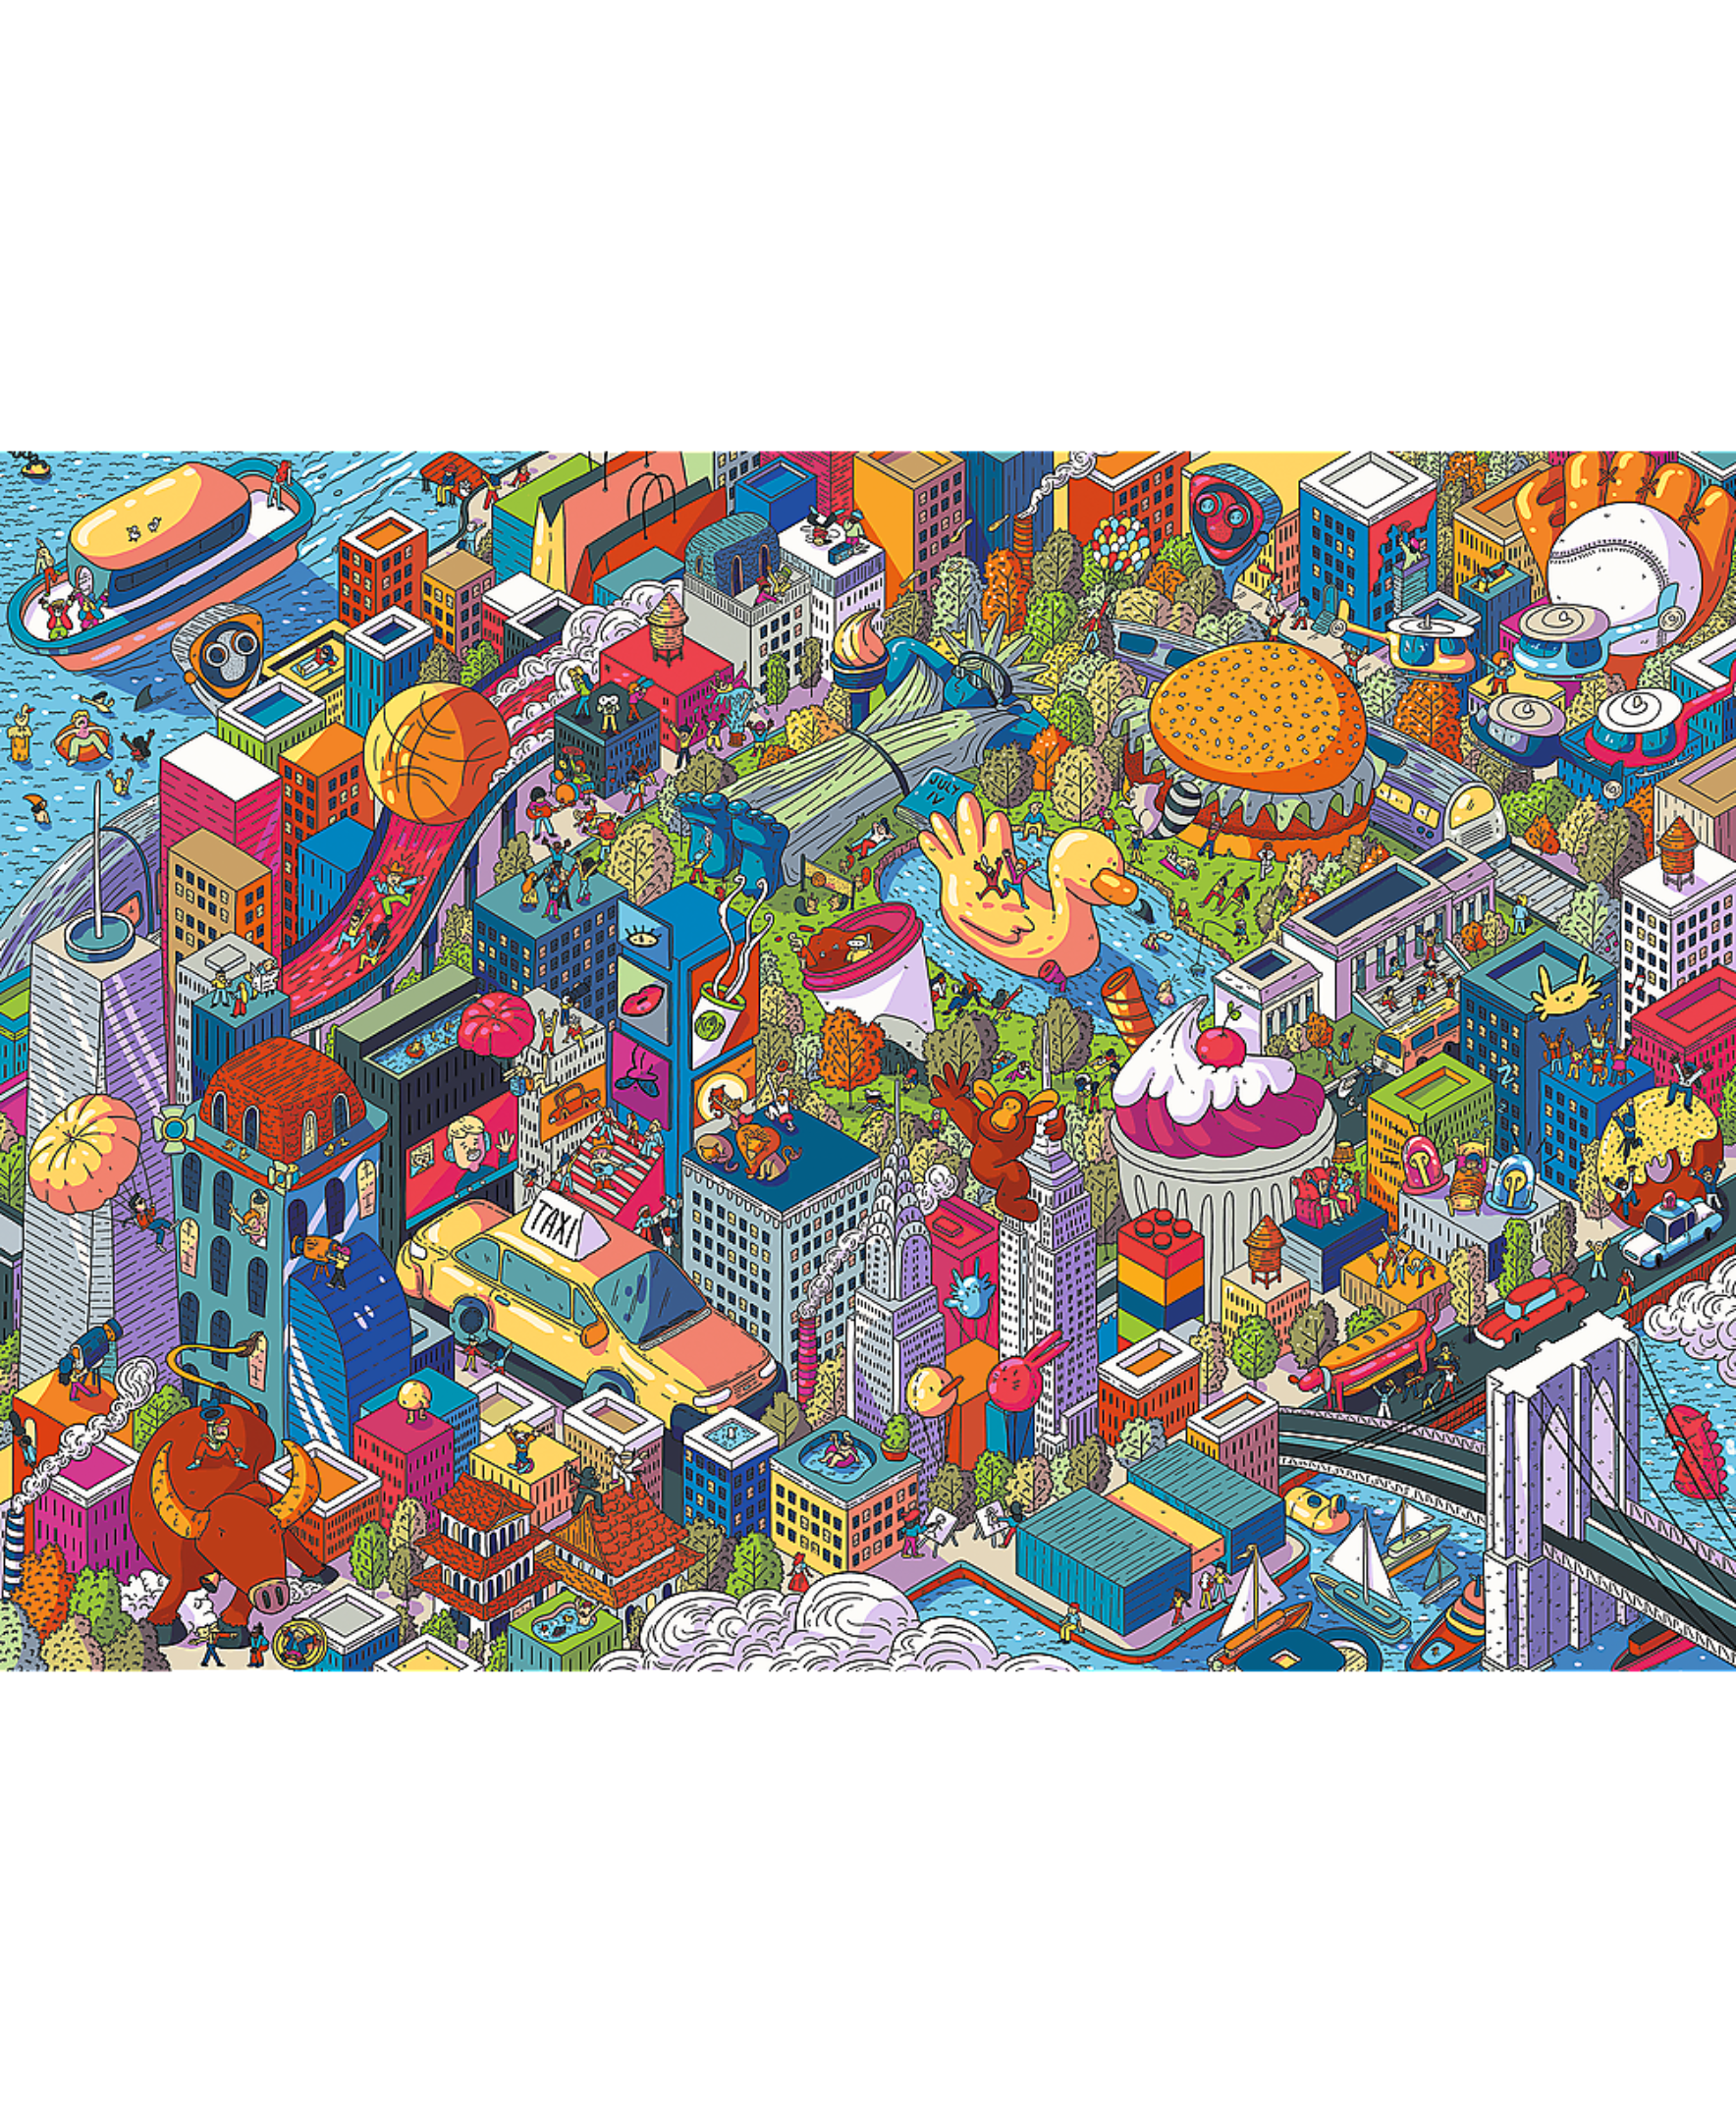 Trefl Prime Eye Spy 1000 Piece Puzzle - Imaginary Cities: New York